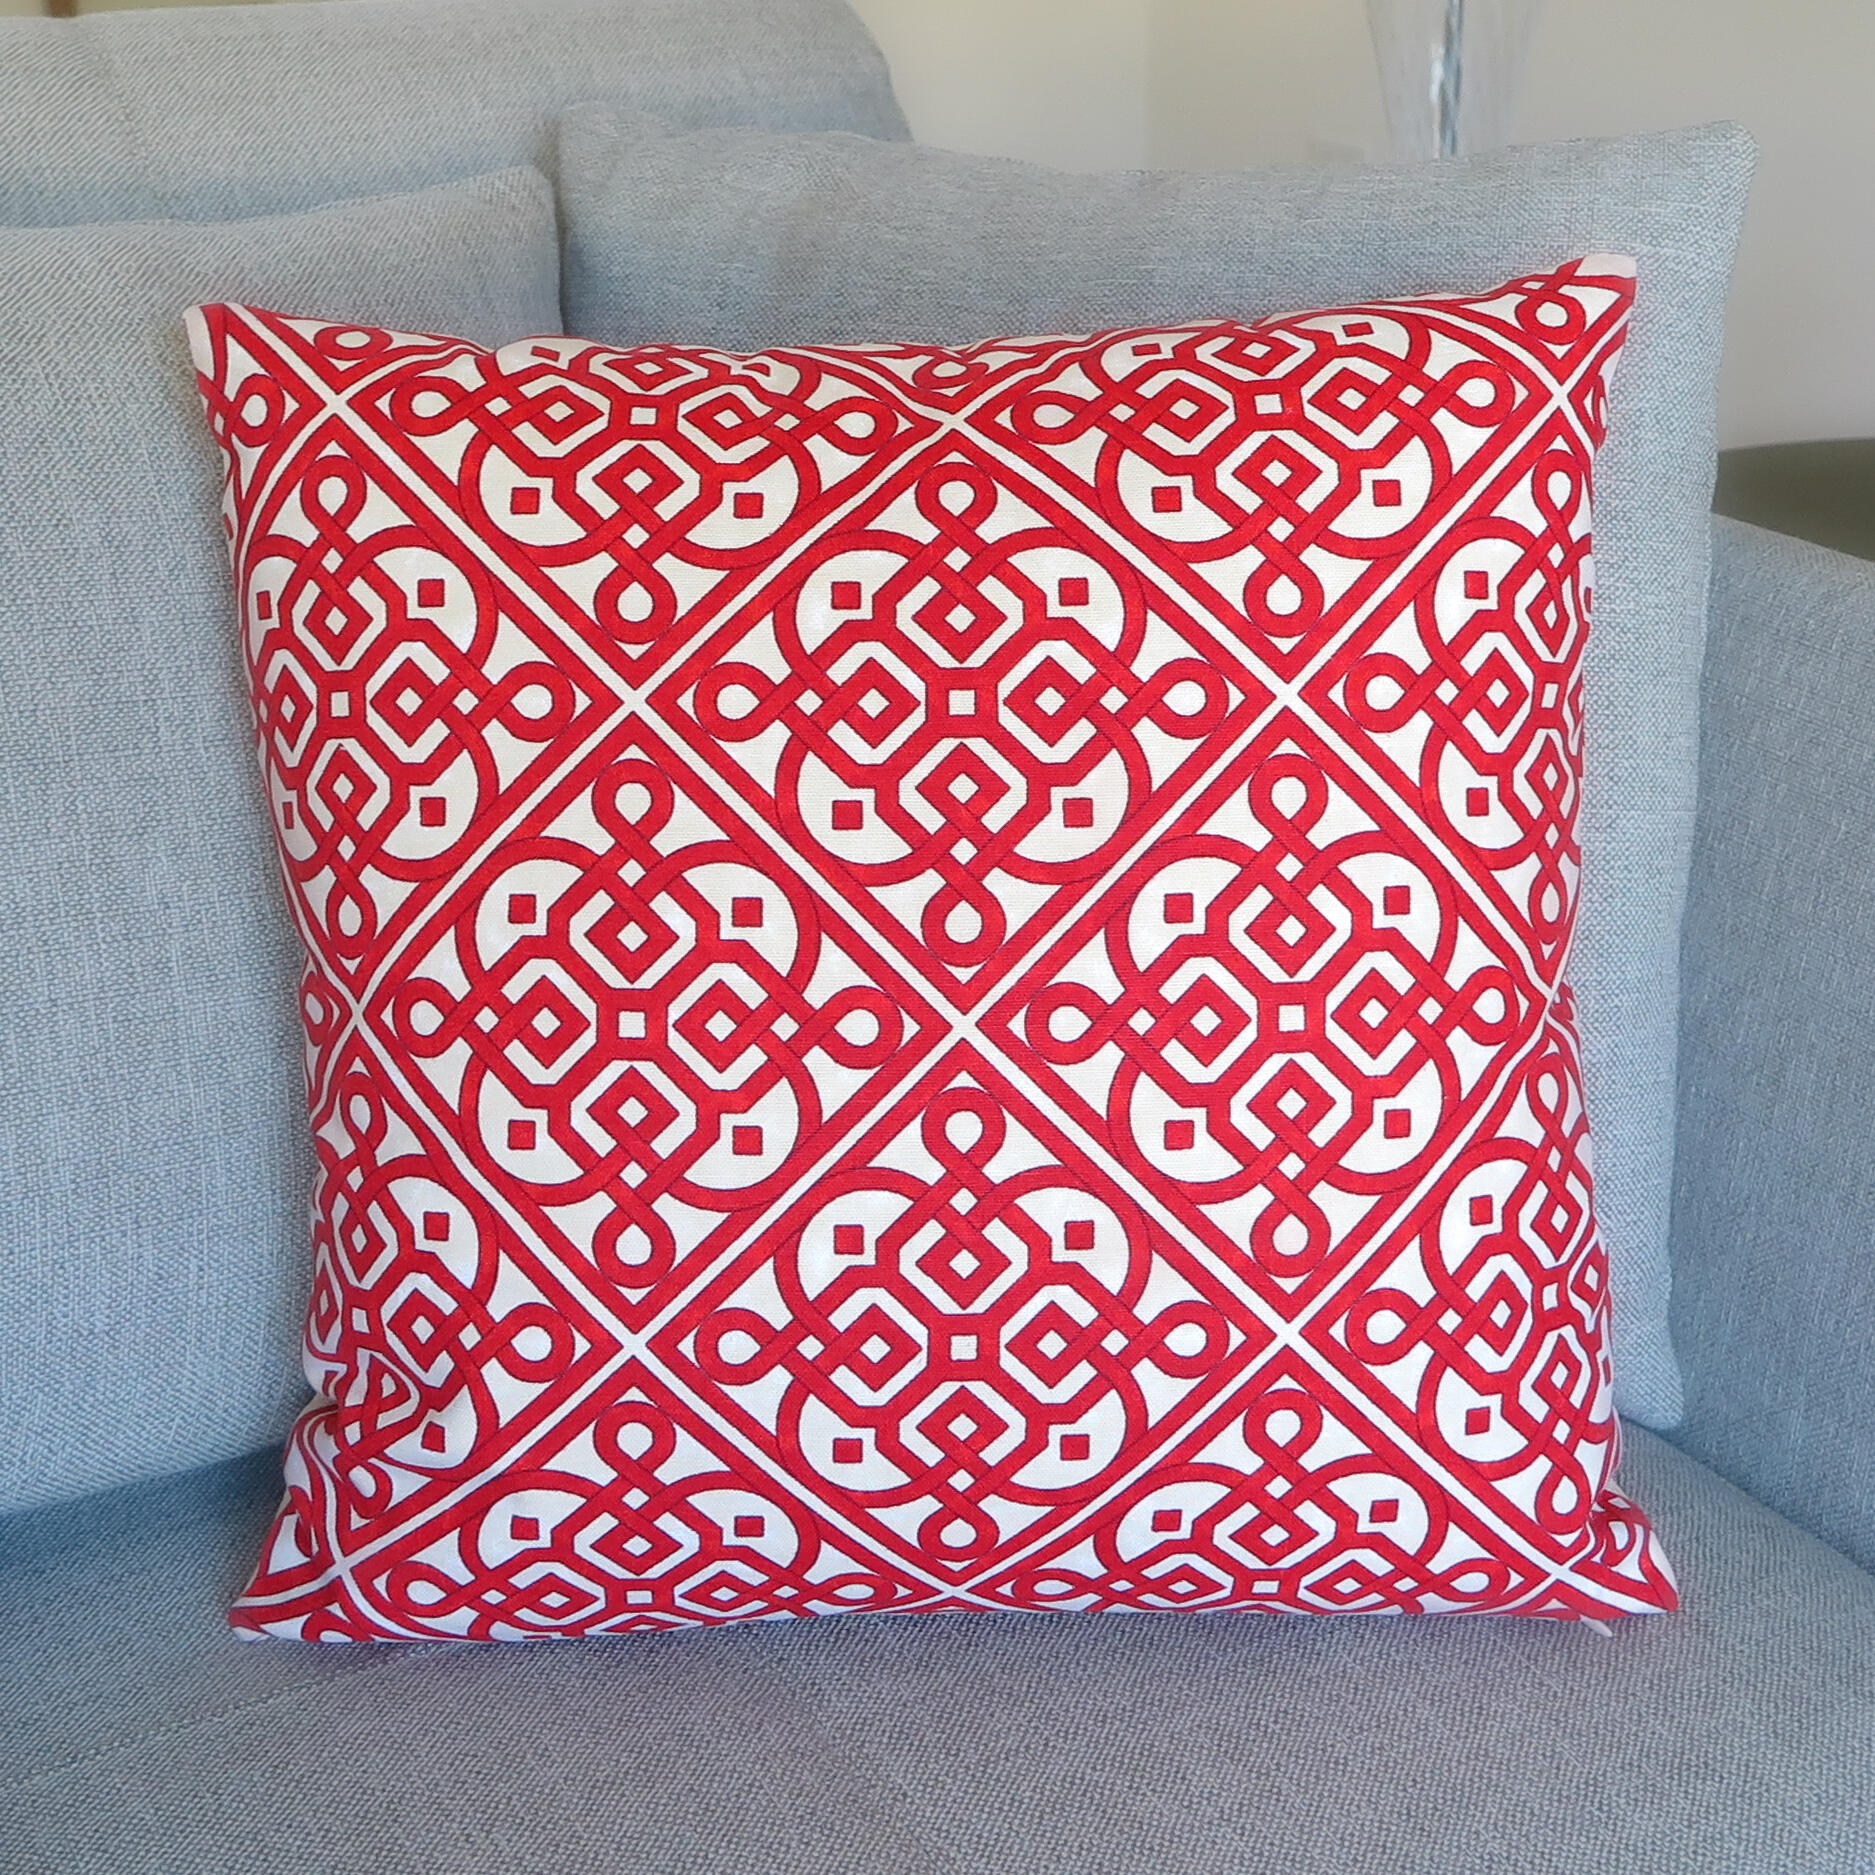 Home & Living :: Home Decor :: Pillows & Cushions :: Red Throw Pillow ...